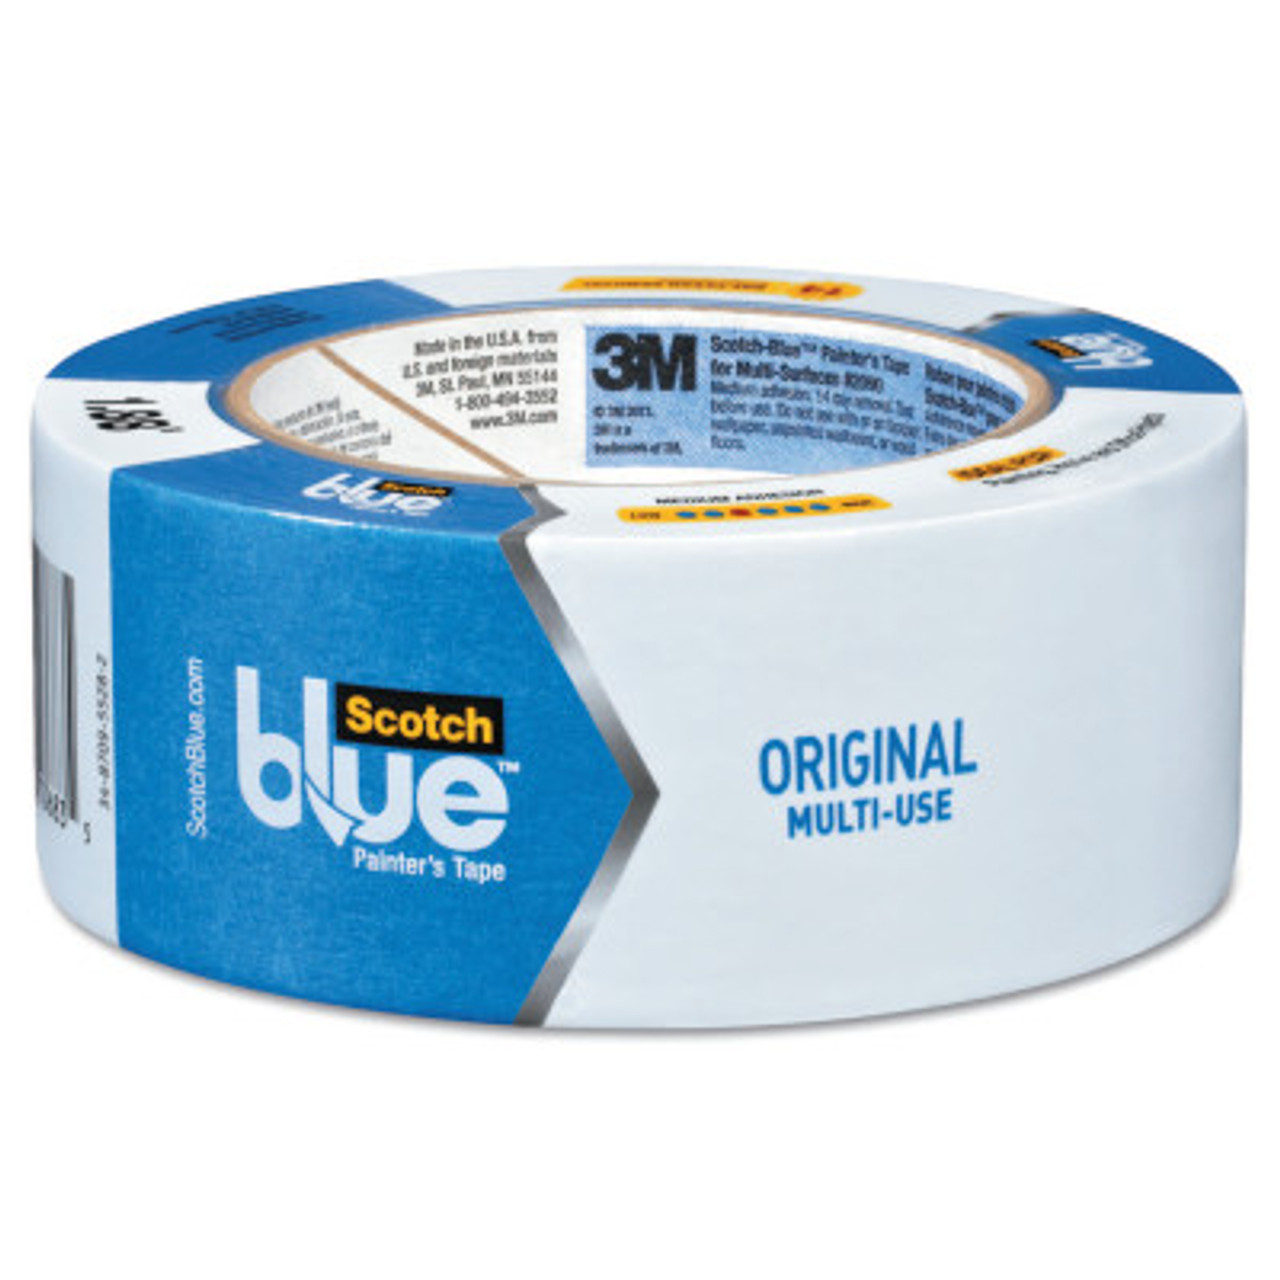 Blue Multi-Surface Painter's Tape